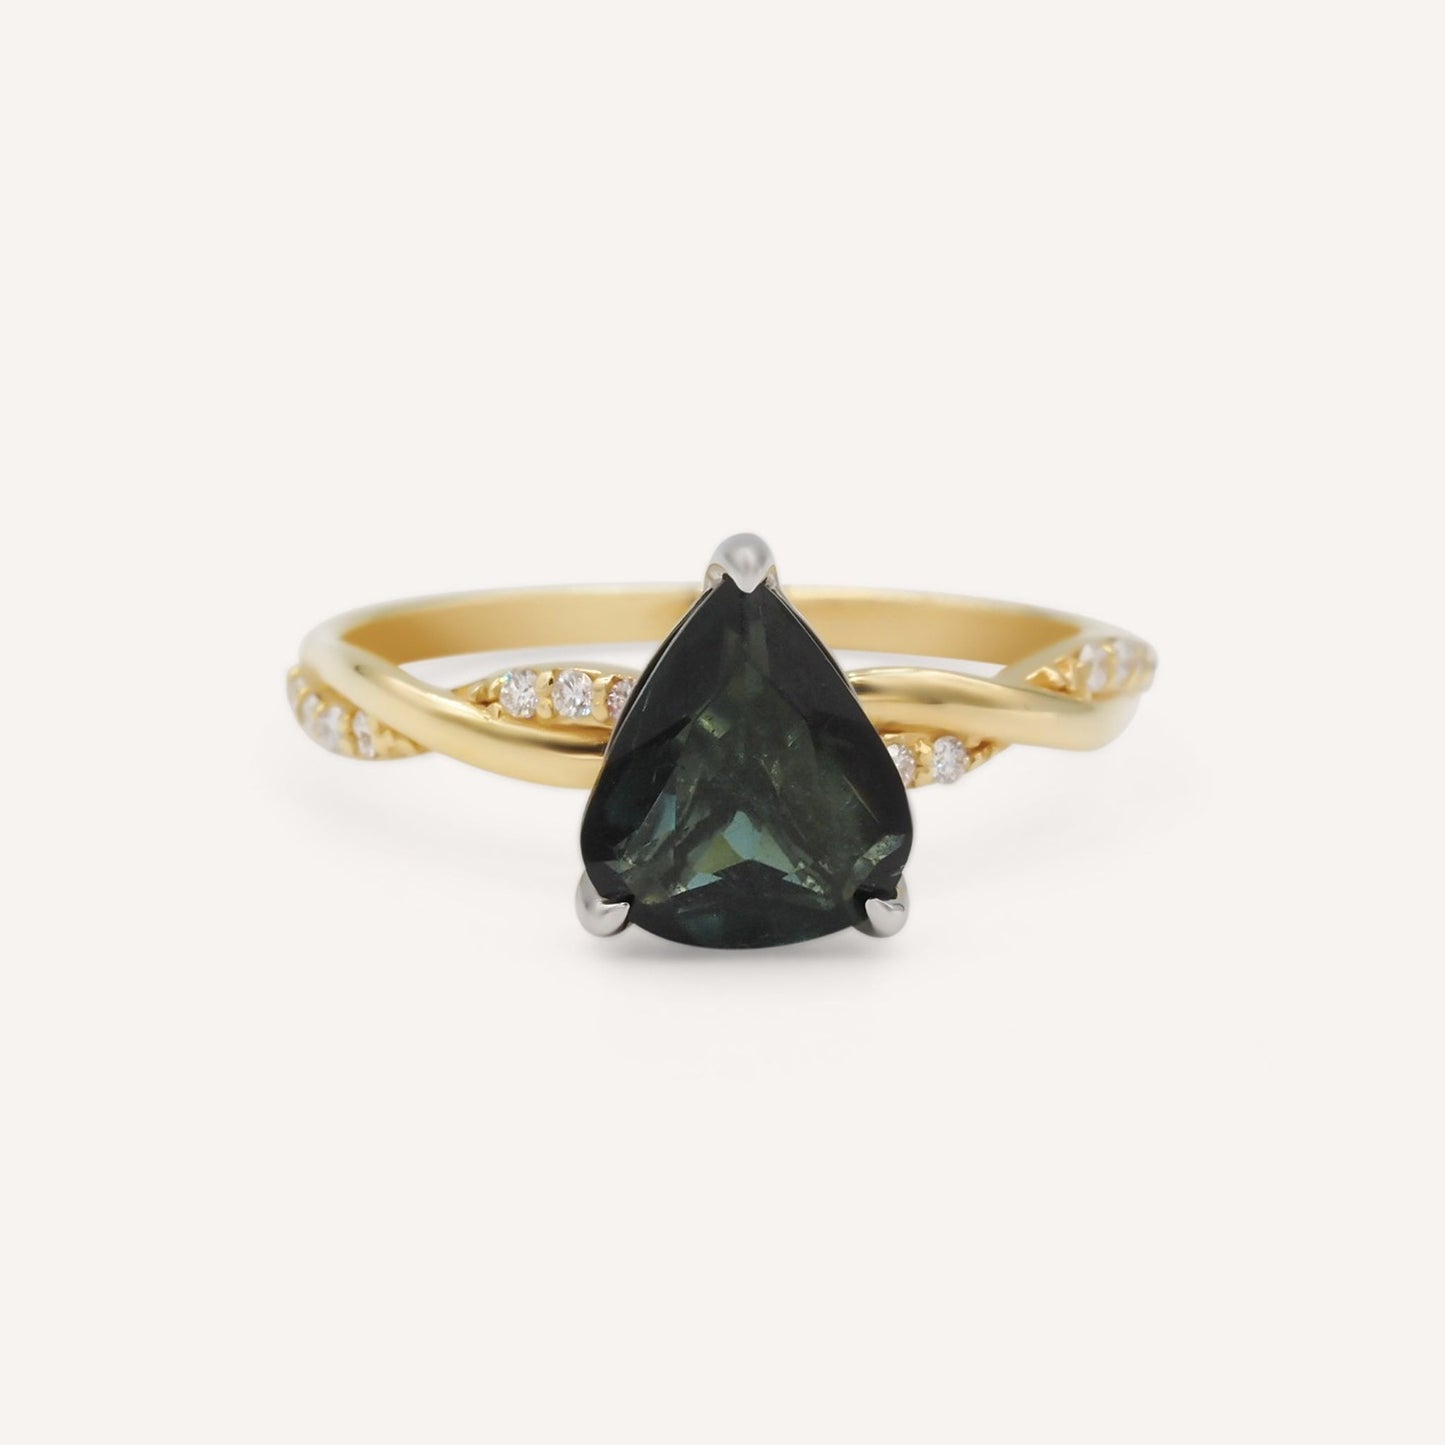 Green sapphire diamonds ring